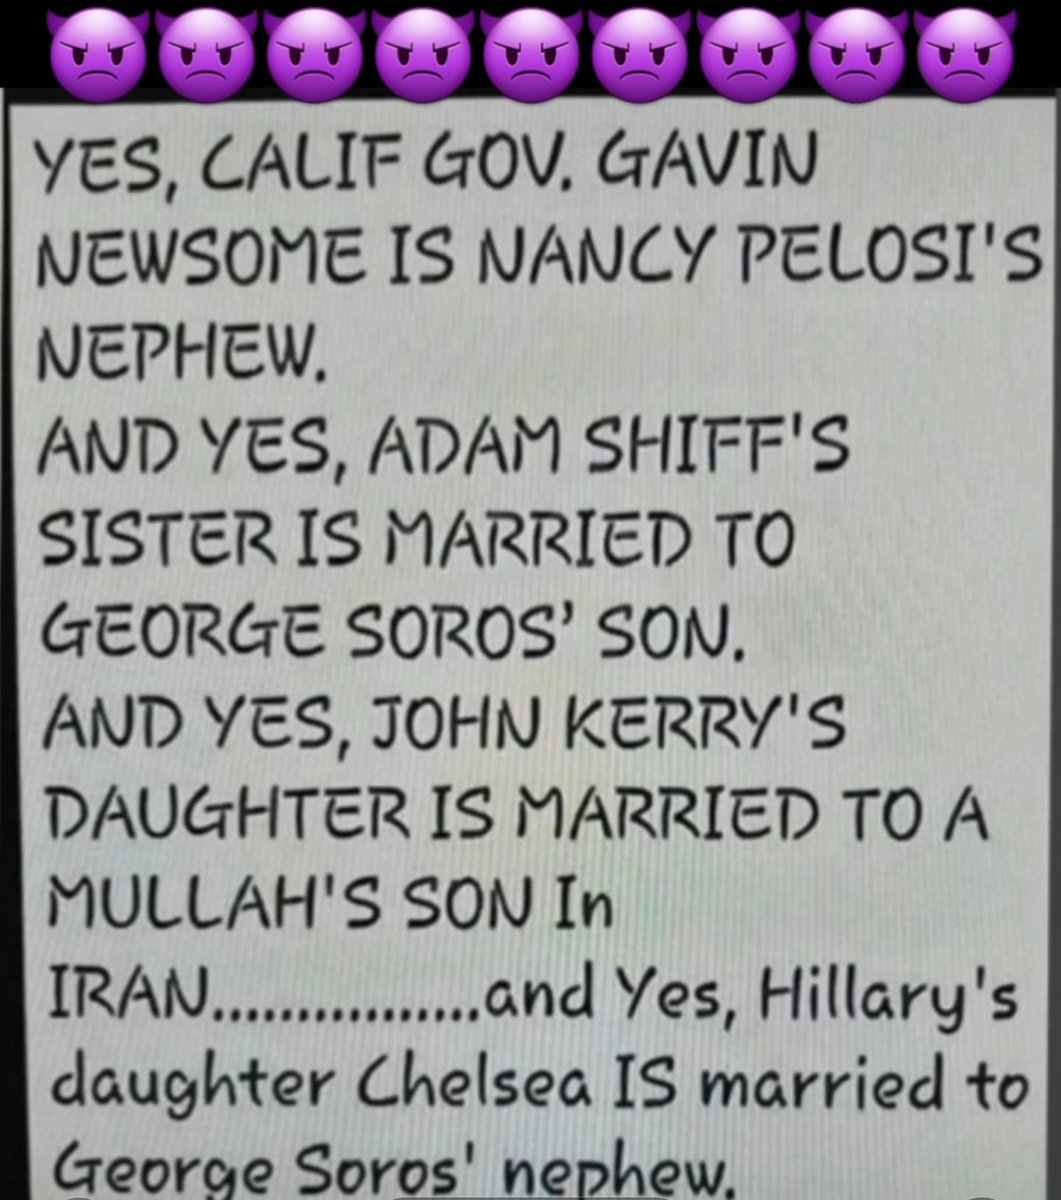 😈 EVIL CORRUPT FAMILY!
#NancyPelosi #gavinnewsomfraud #Clintoncrimes #JohnkerryIran #bidenfundedIRAN #HamasislSIS #MexicoGP #GazaWar #FreeIsreal #PalestineisHamas